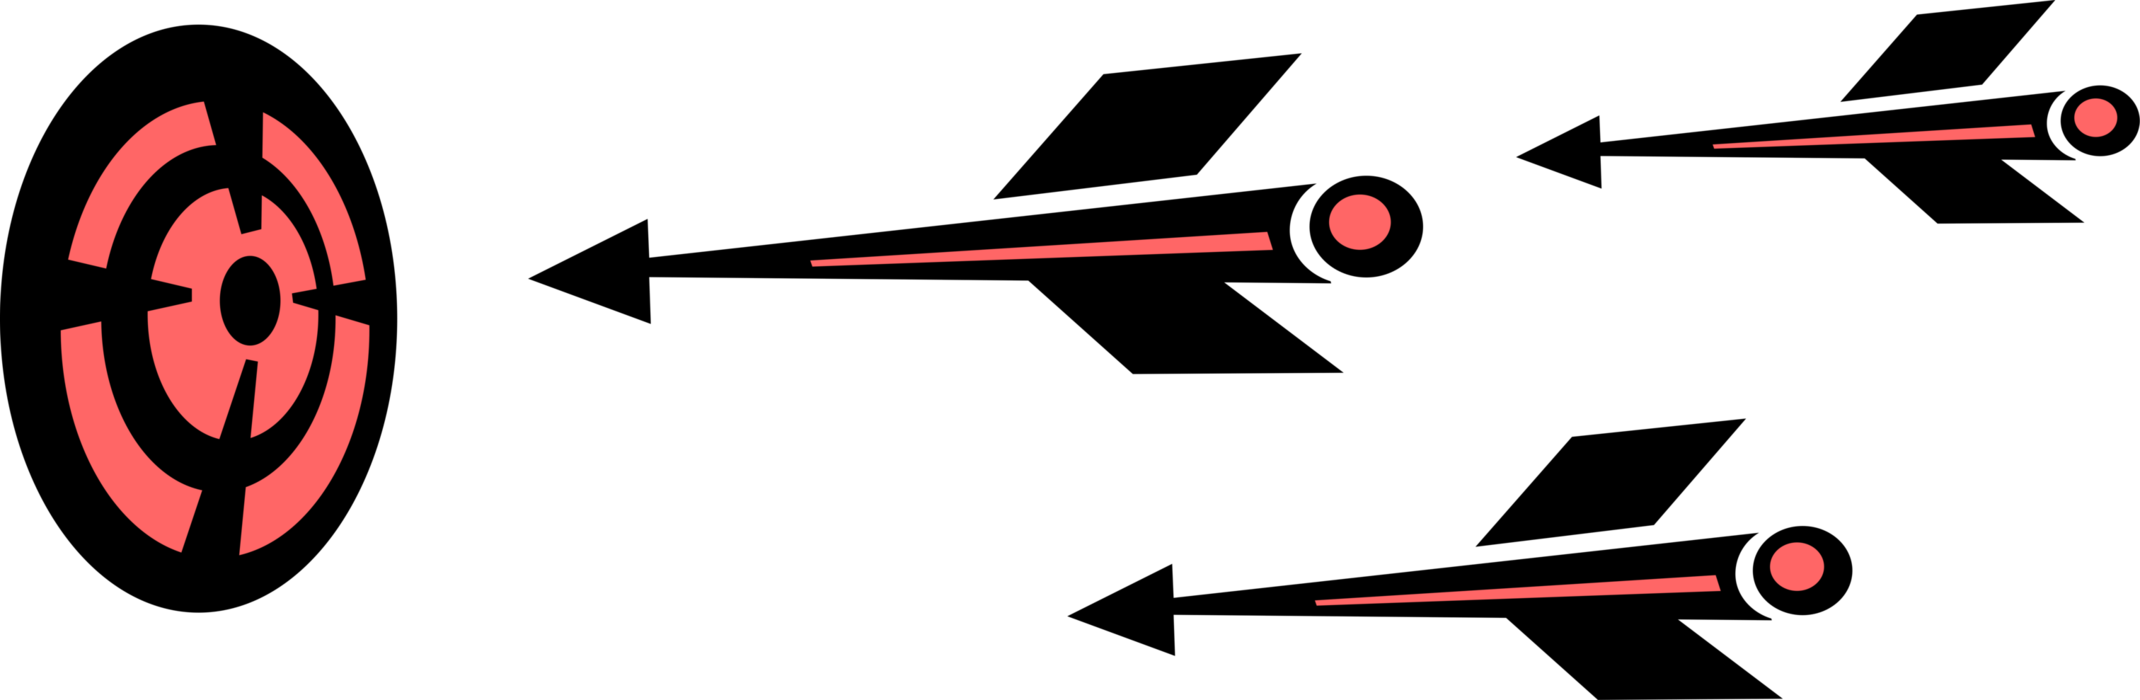 Vector Illustration of Archery Marksmanship Arrow Shafts in Flight with Bullseye or Bull's-Eye Target